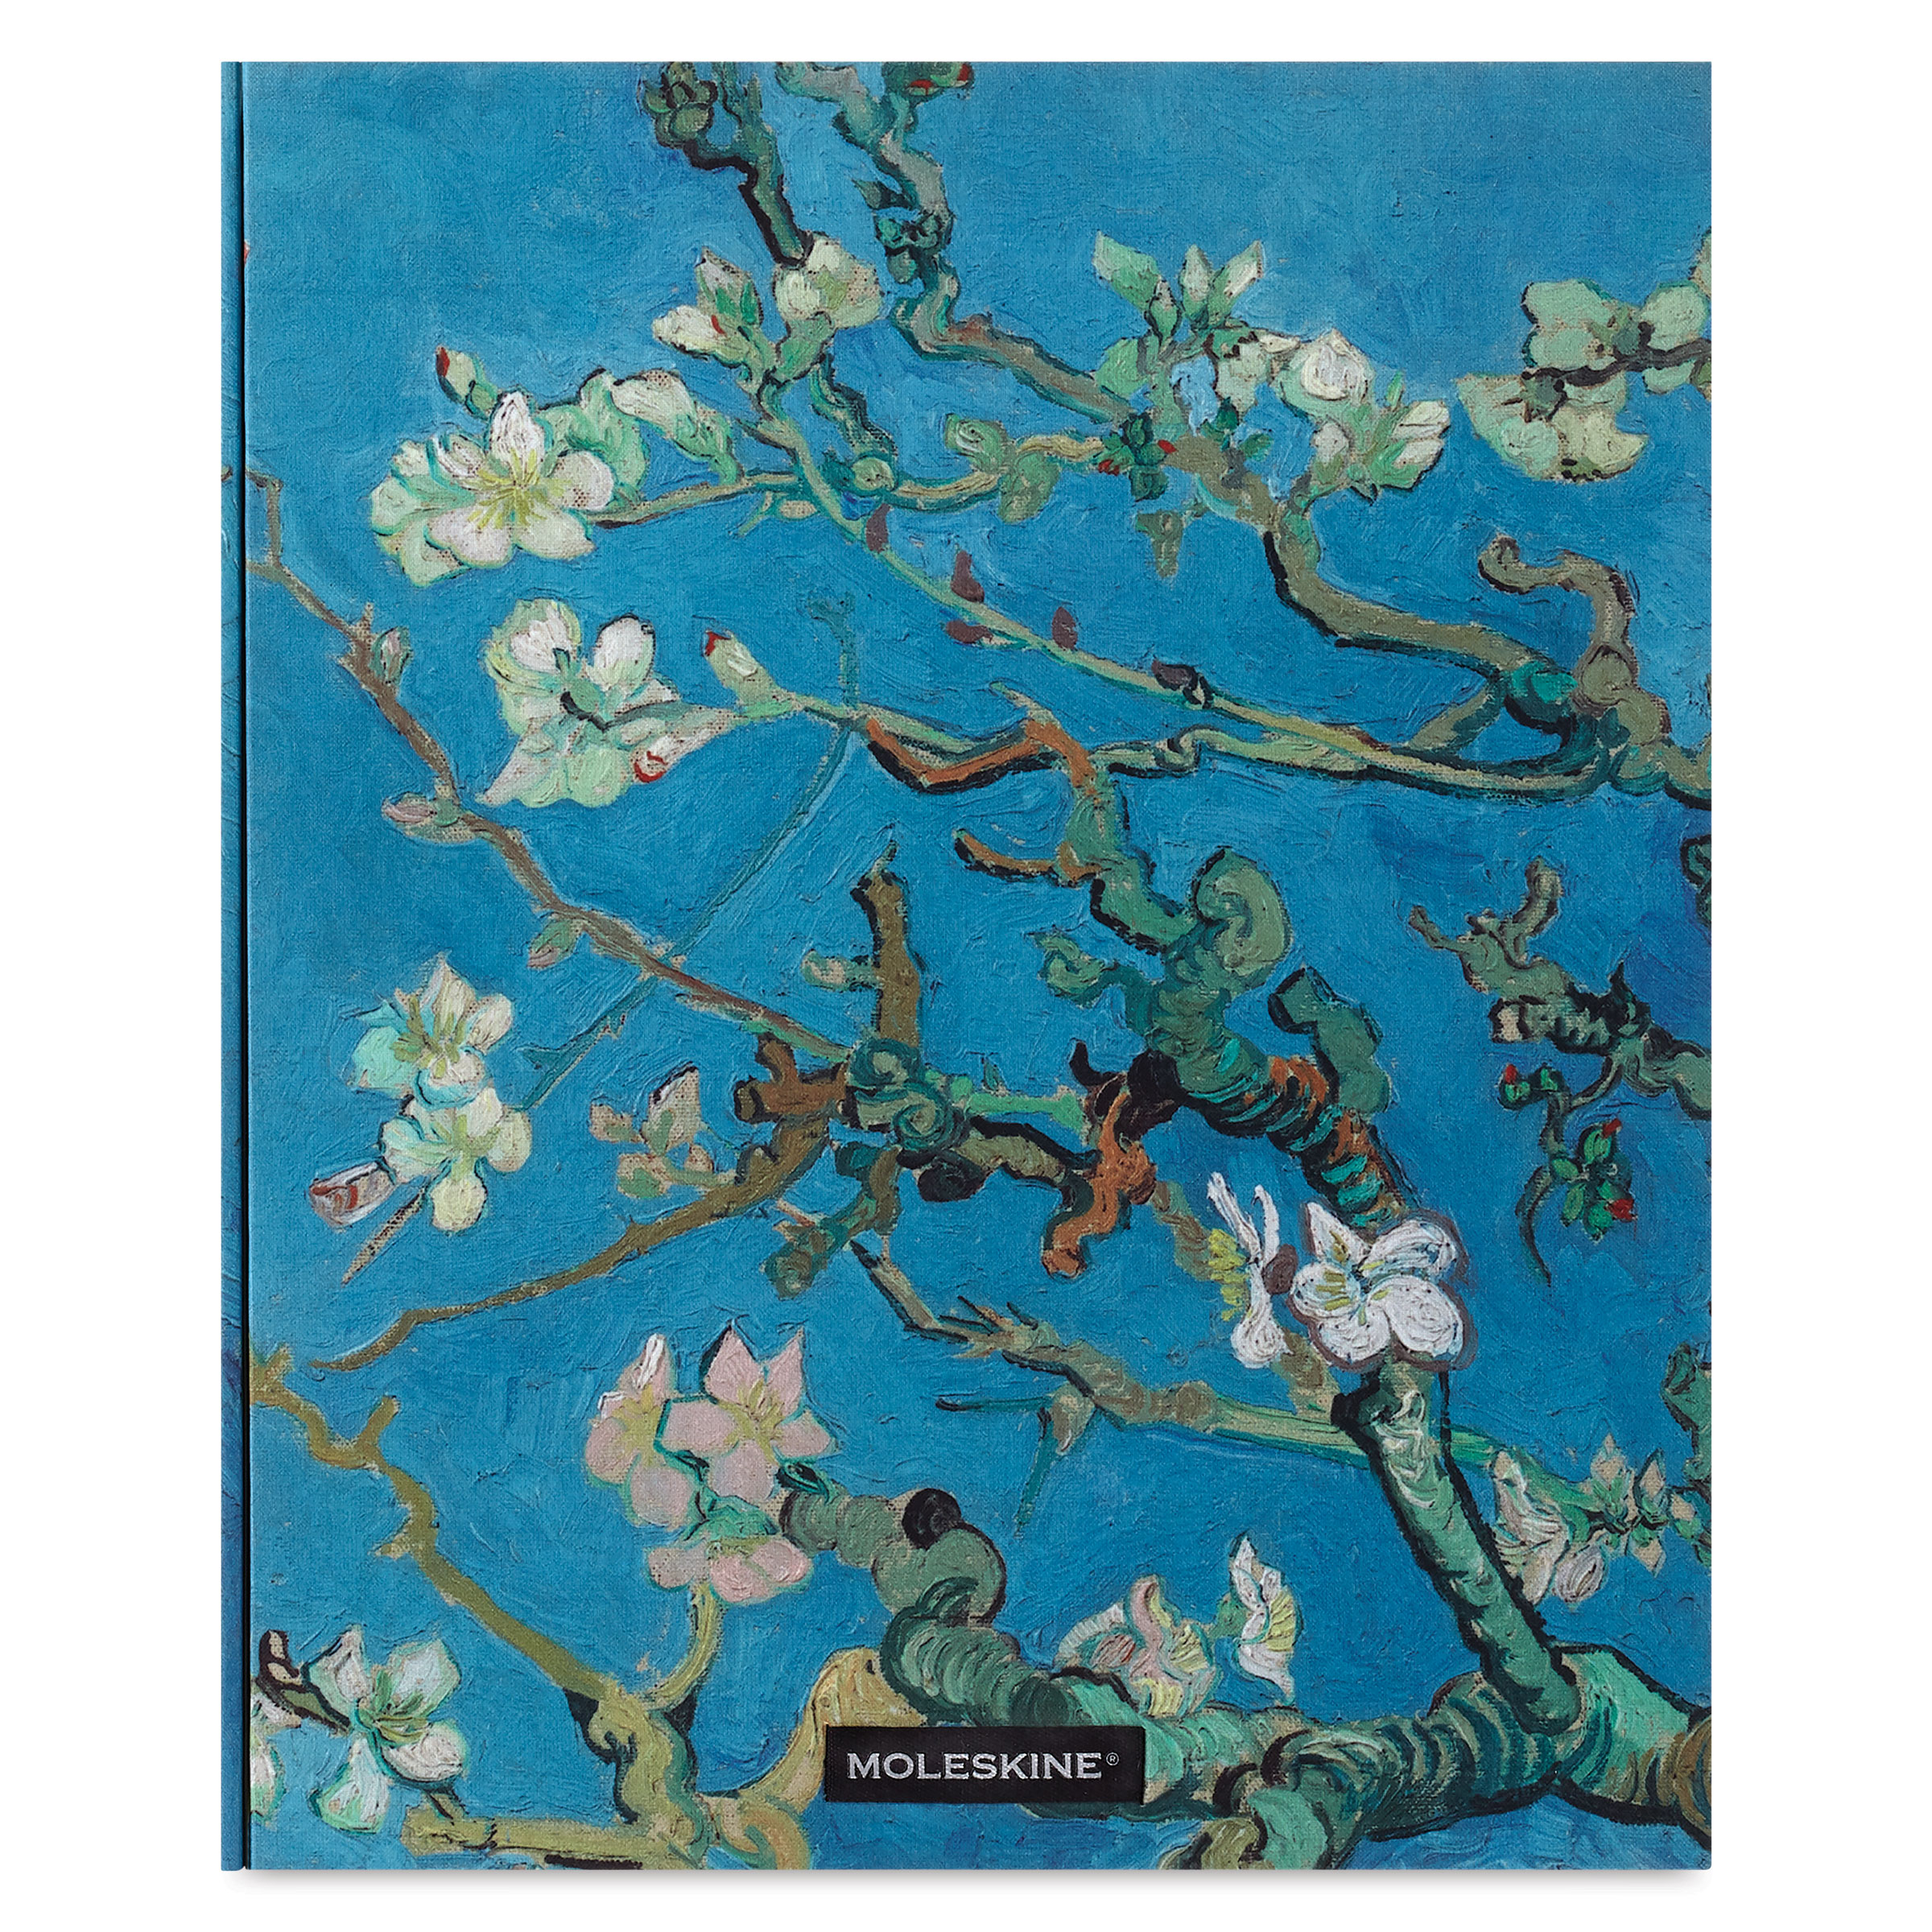 Moleskine Limited Edition Van Gogh Hardcover Sketchbook